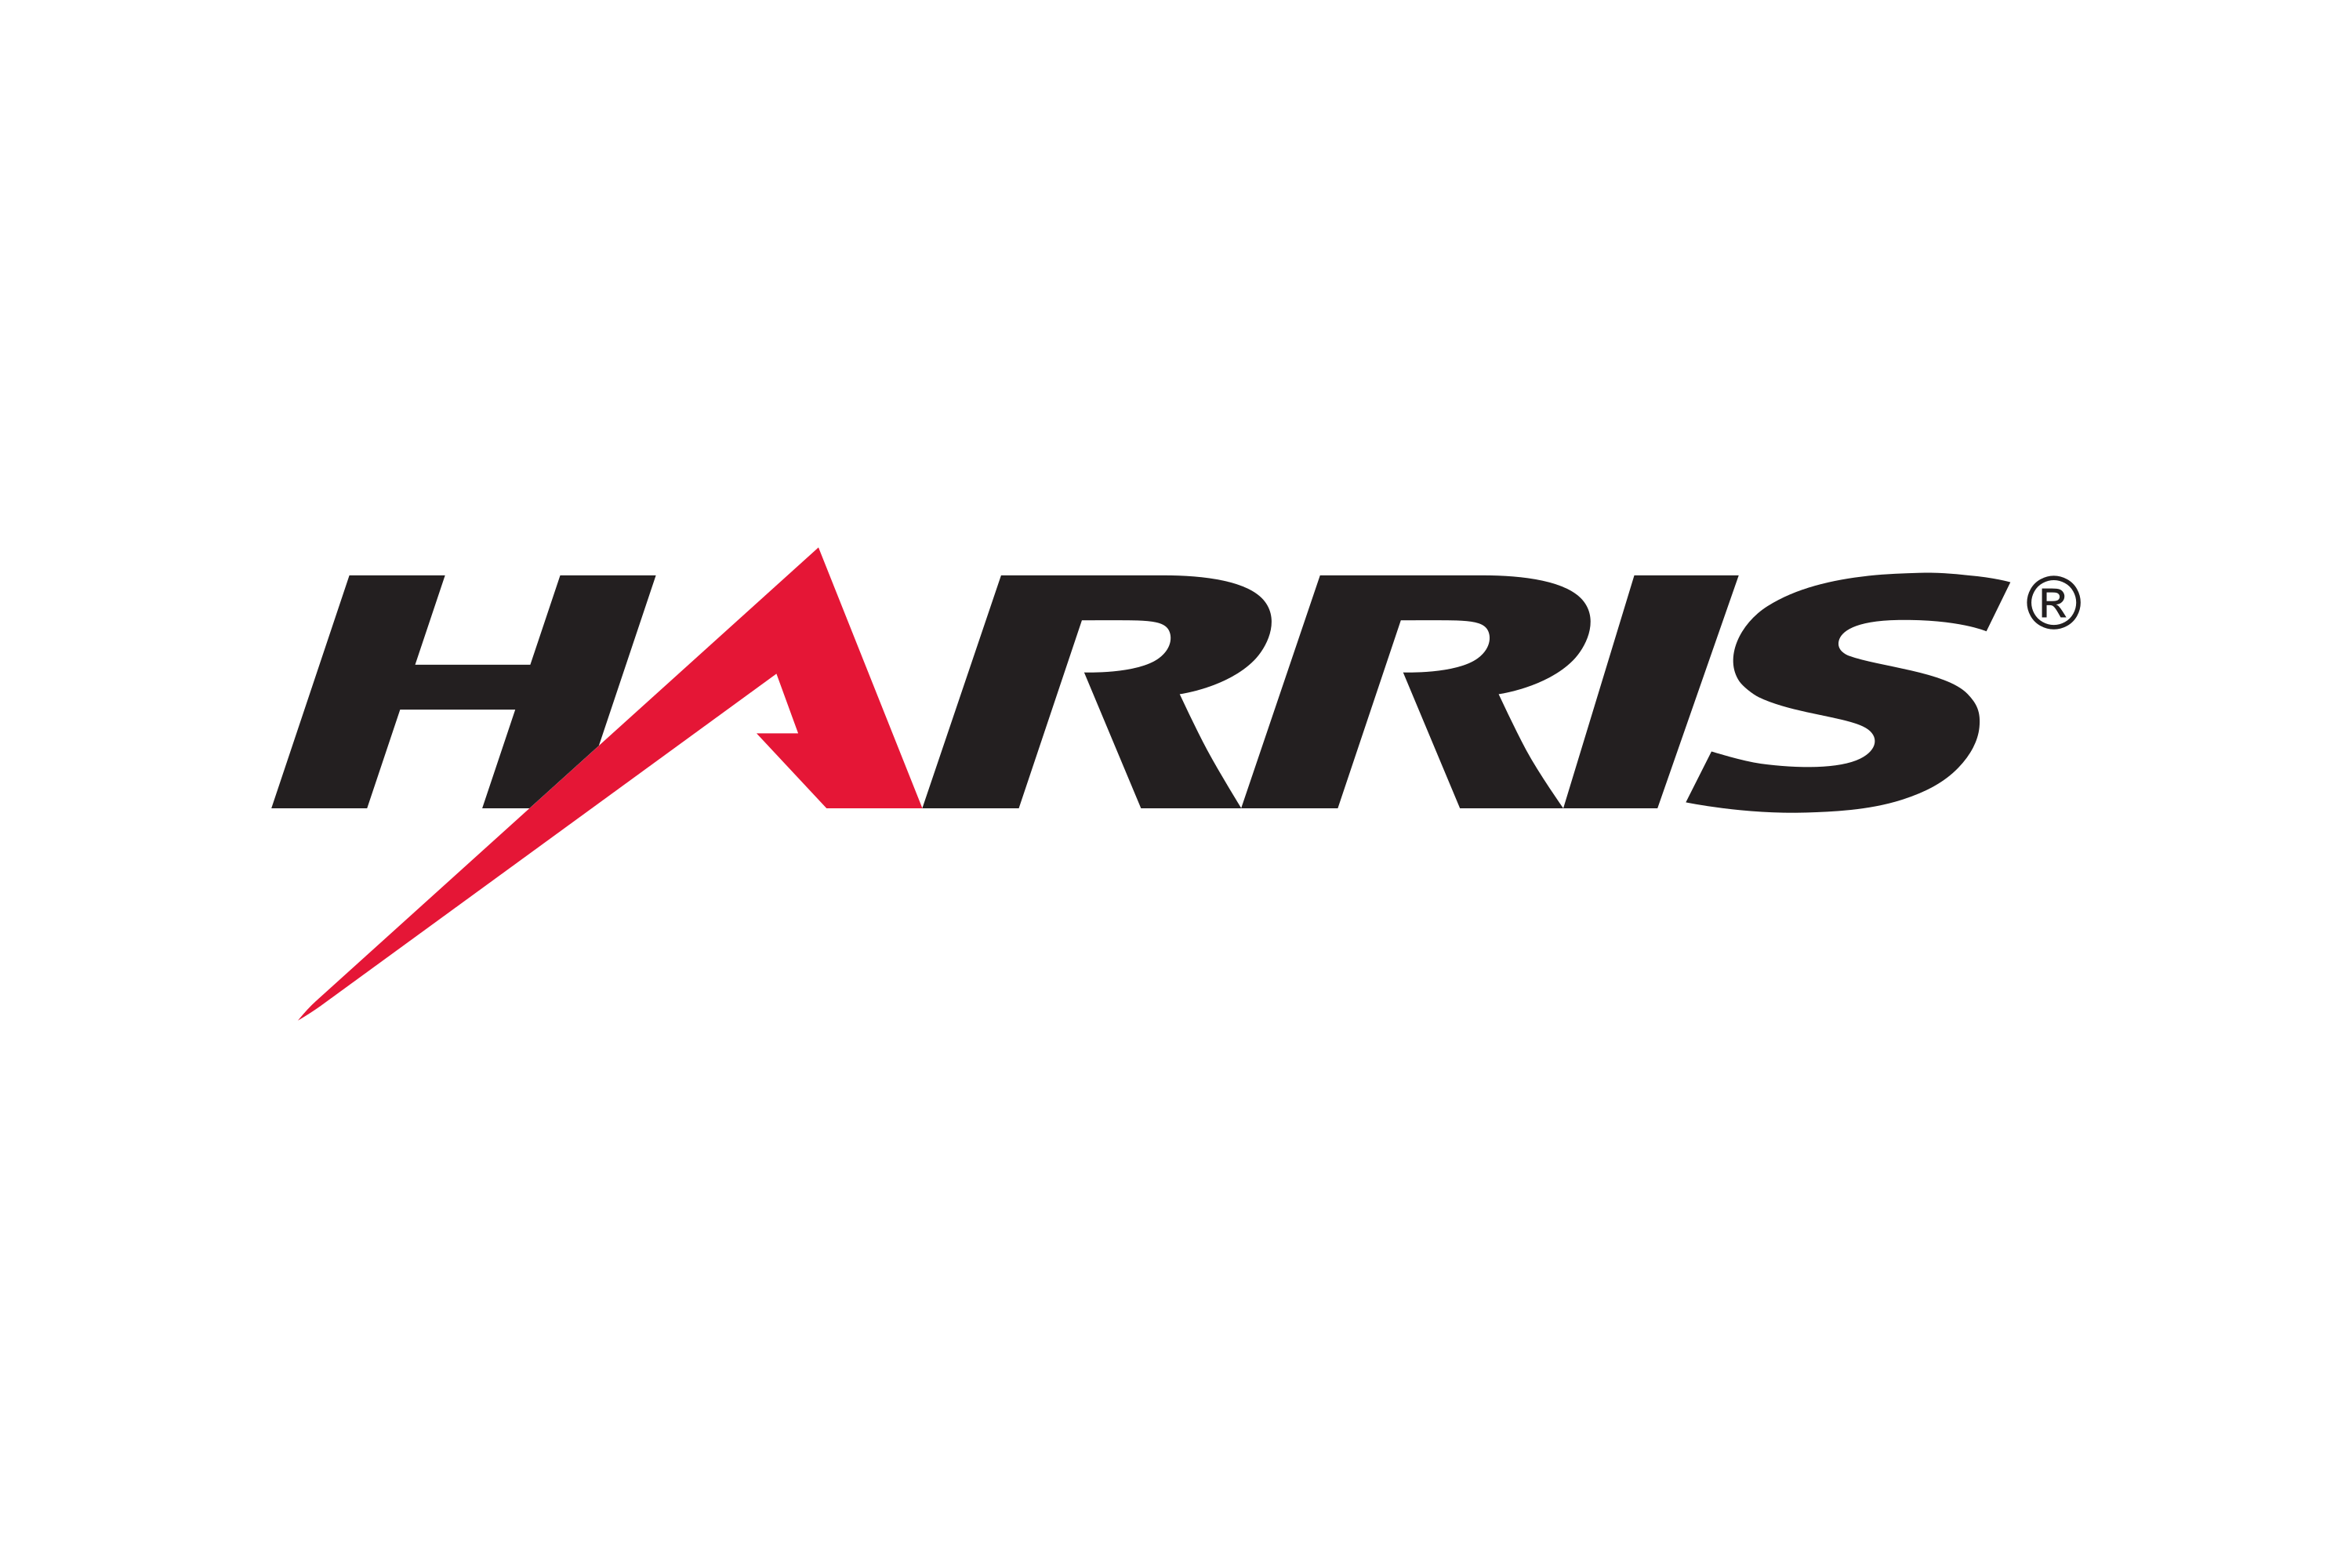 Download Harris Corporation Logo in SVG Vector or PNG File Format ...